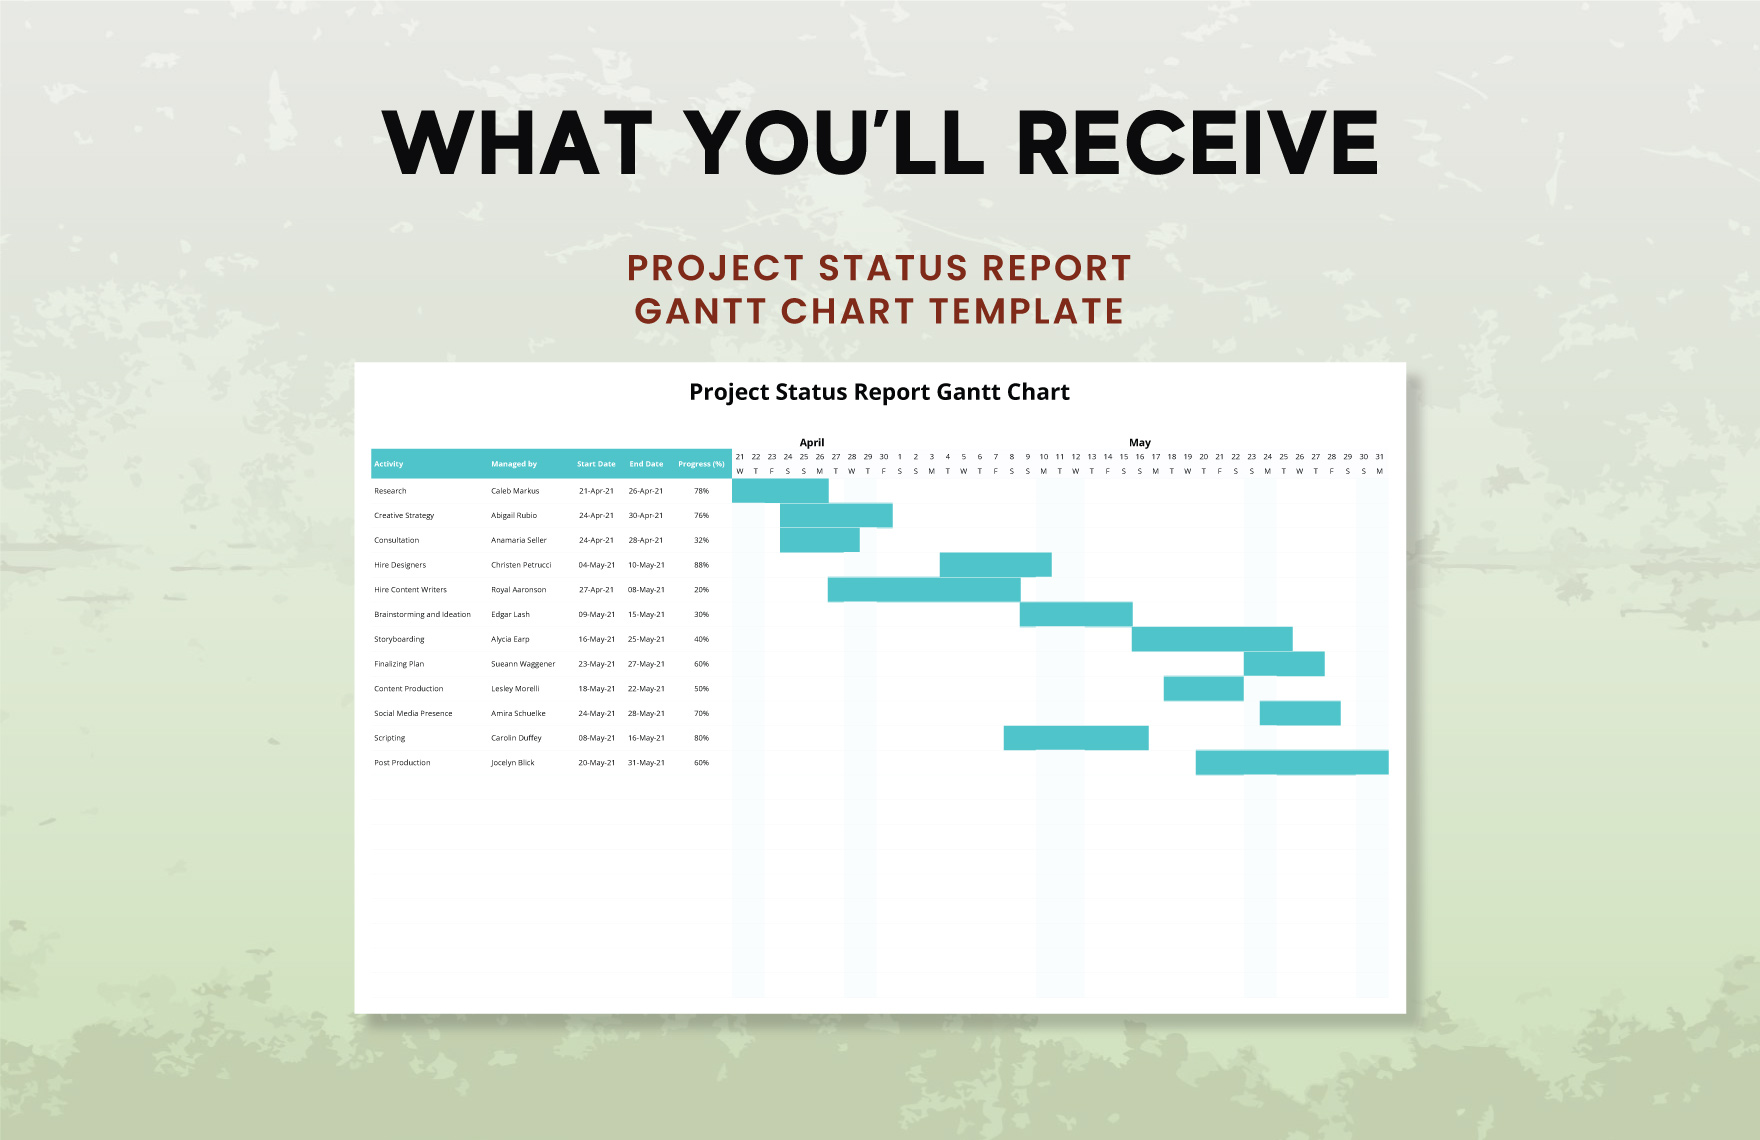 Project Status Report Gantt Chart Template